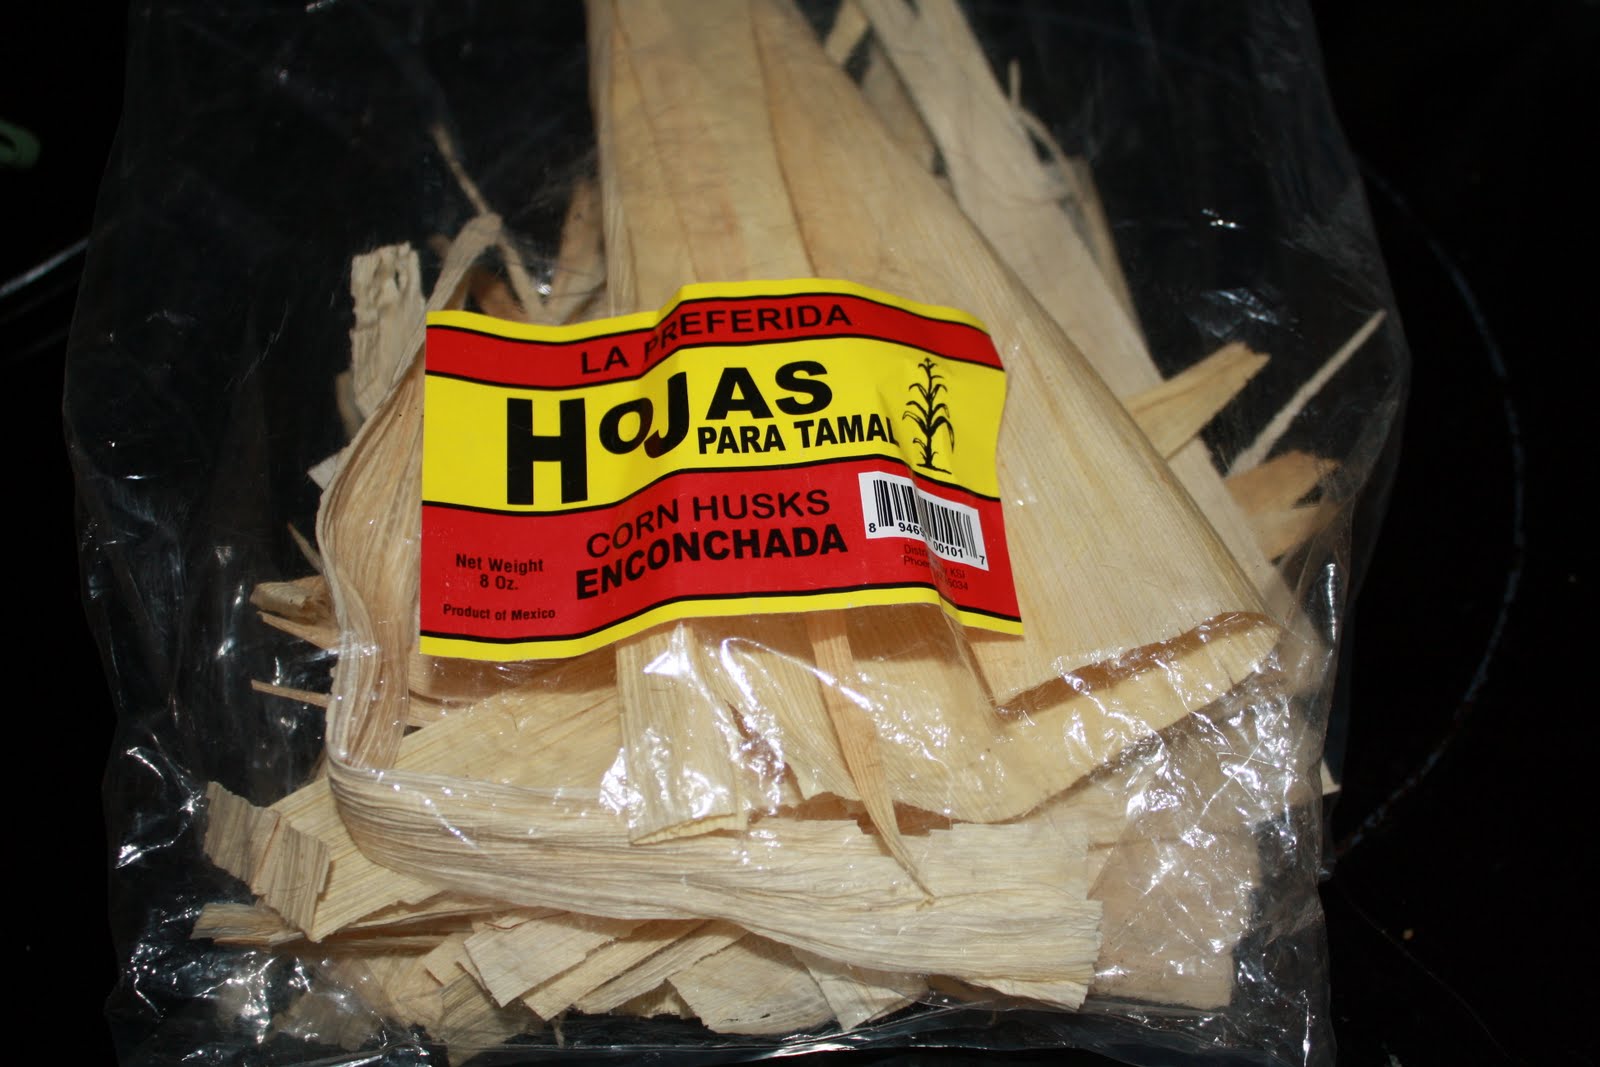 Corn Husk -1lb - Hoja de Tamal - Premium Corn Husk for Foods/Crafts -Tamales